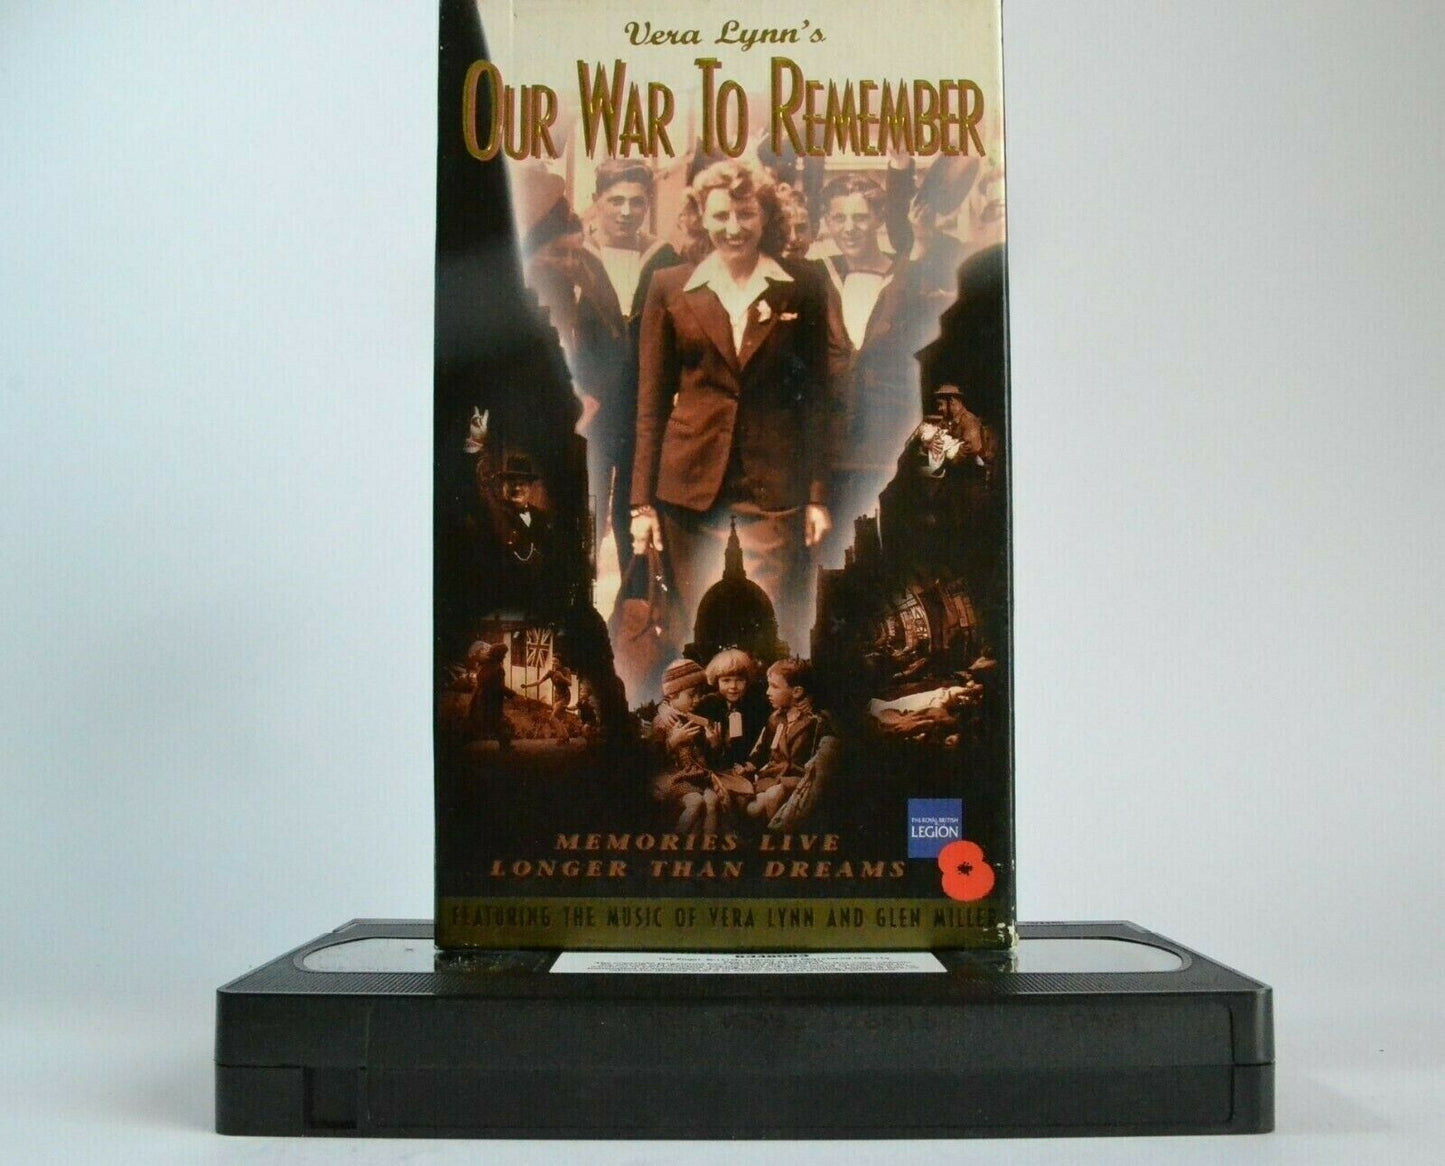 Our War To Remember [Vera Lynn] - Carton Box - Documentary - World War 2 - VHS-